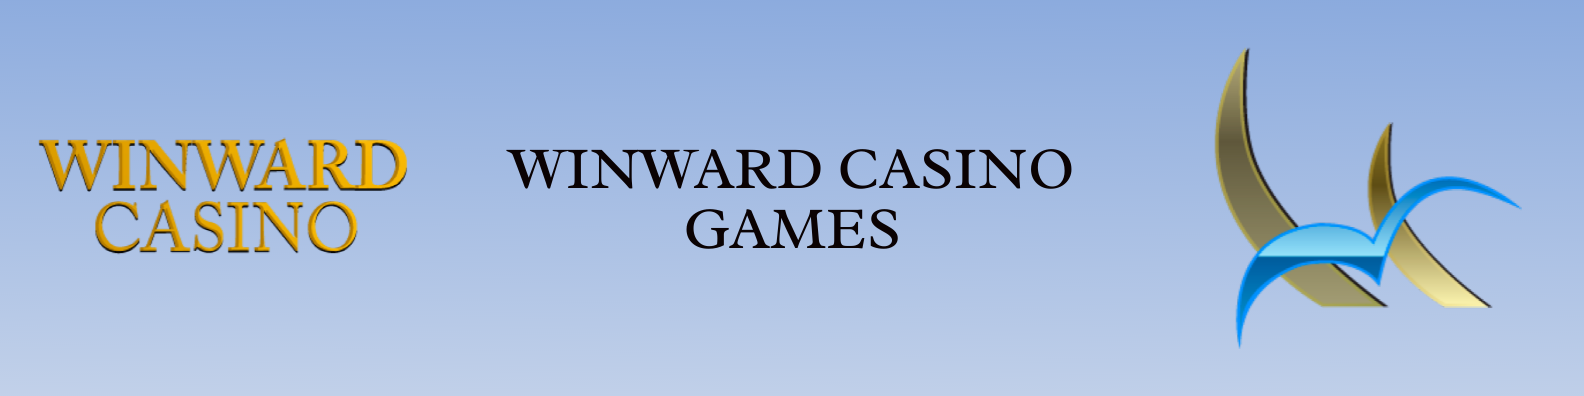 Winward Casino Games